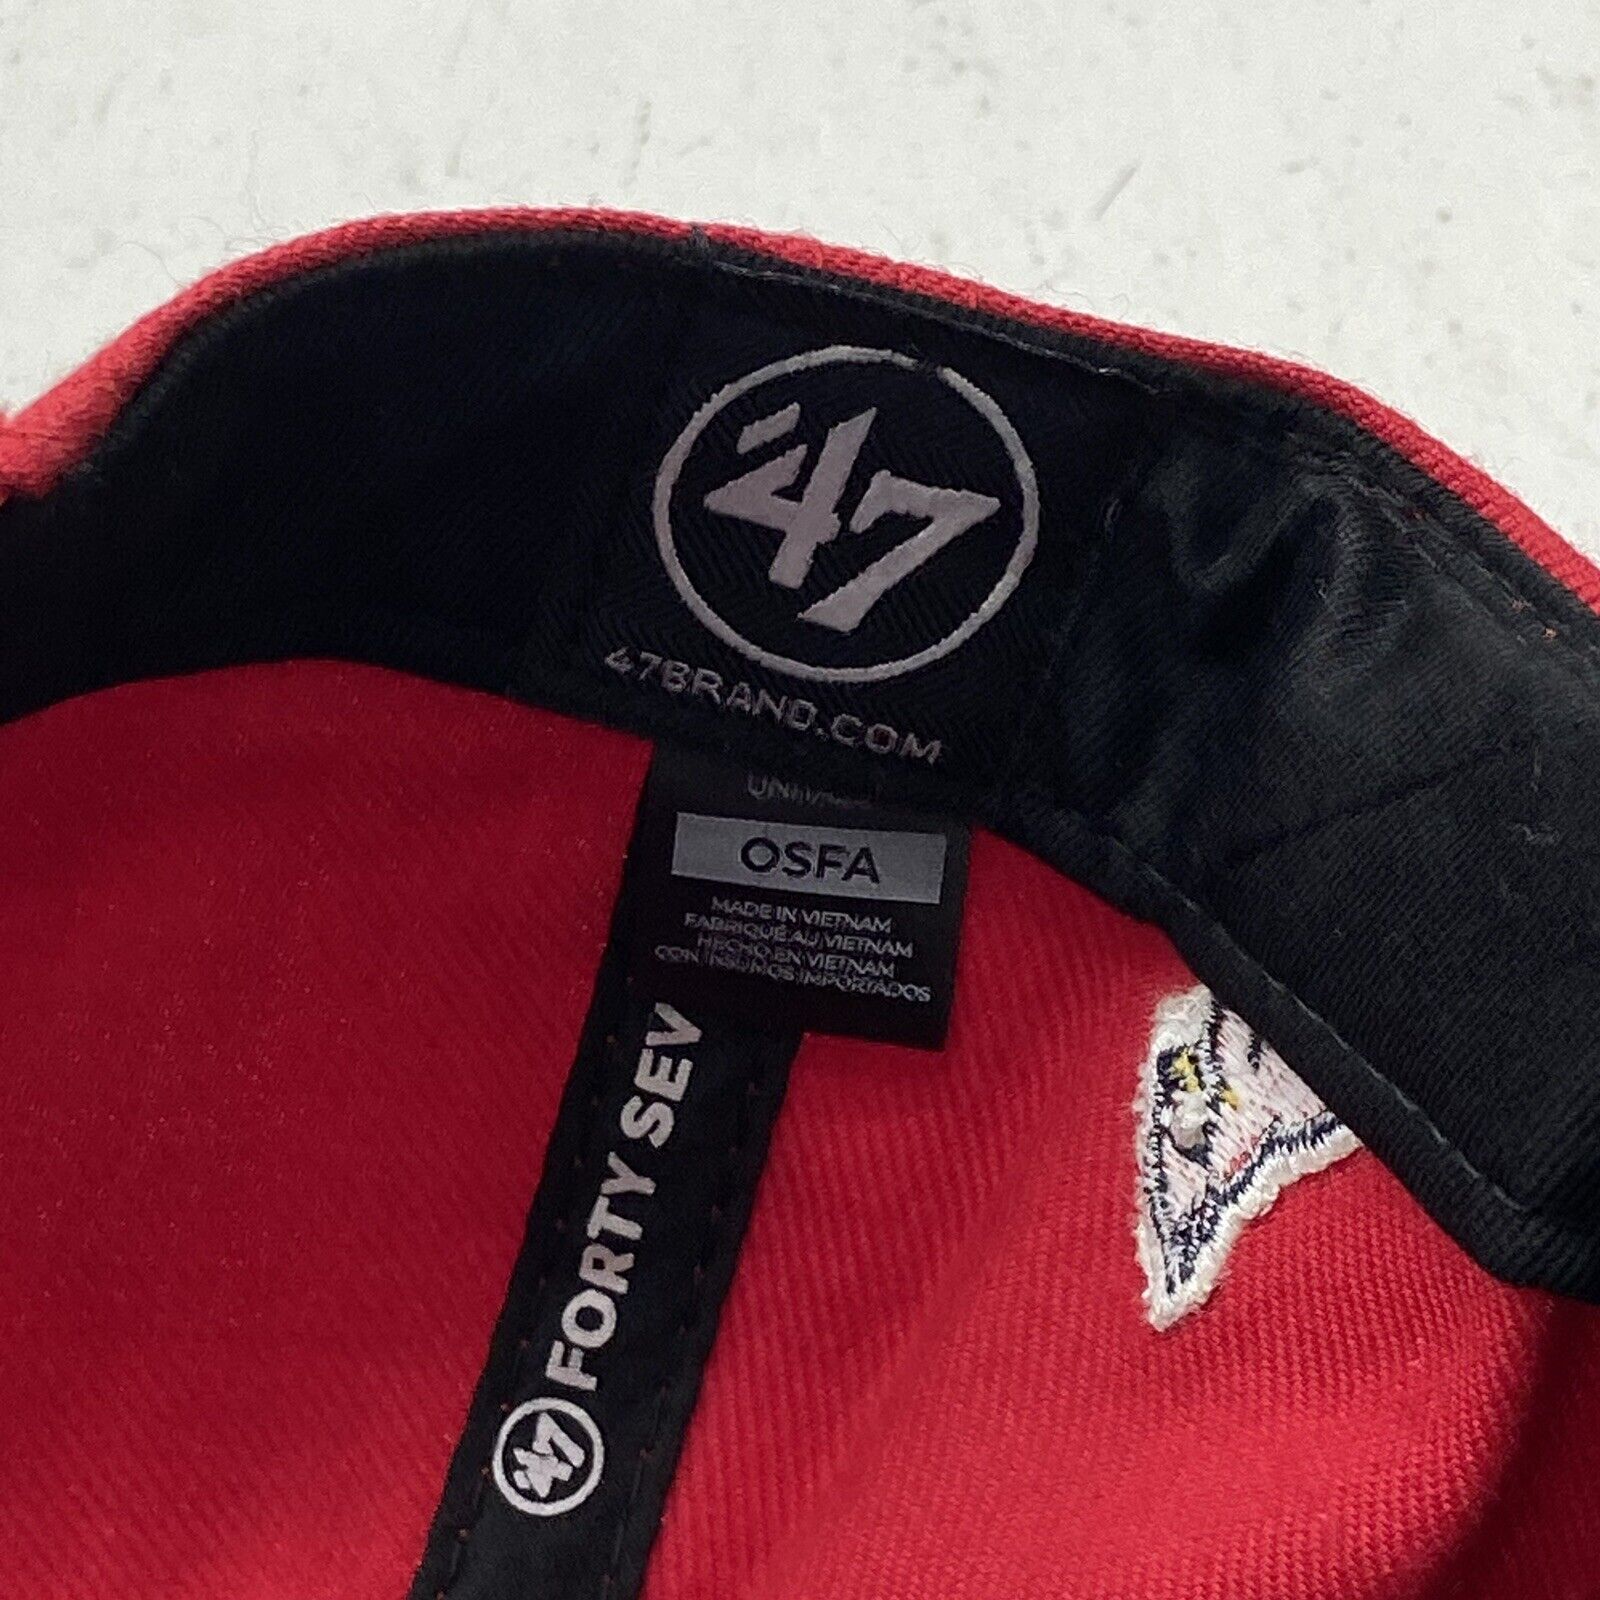 St. Louis Cardinals Men’s 47 Brand Adjustable Hat